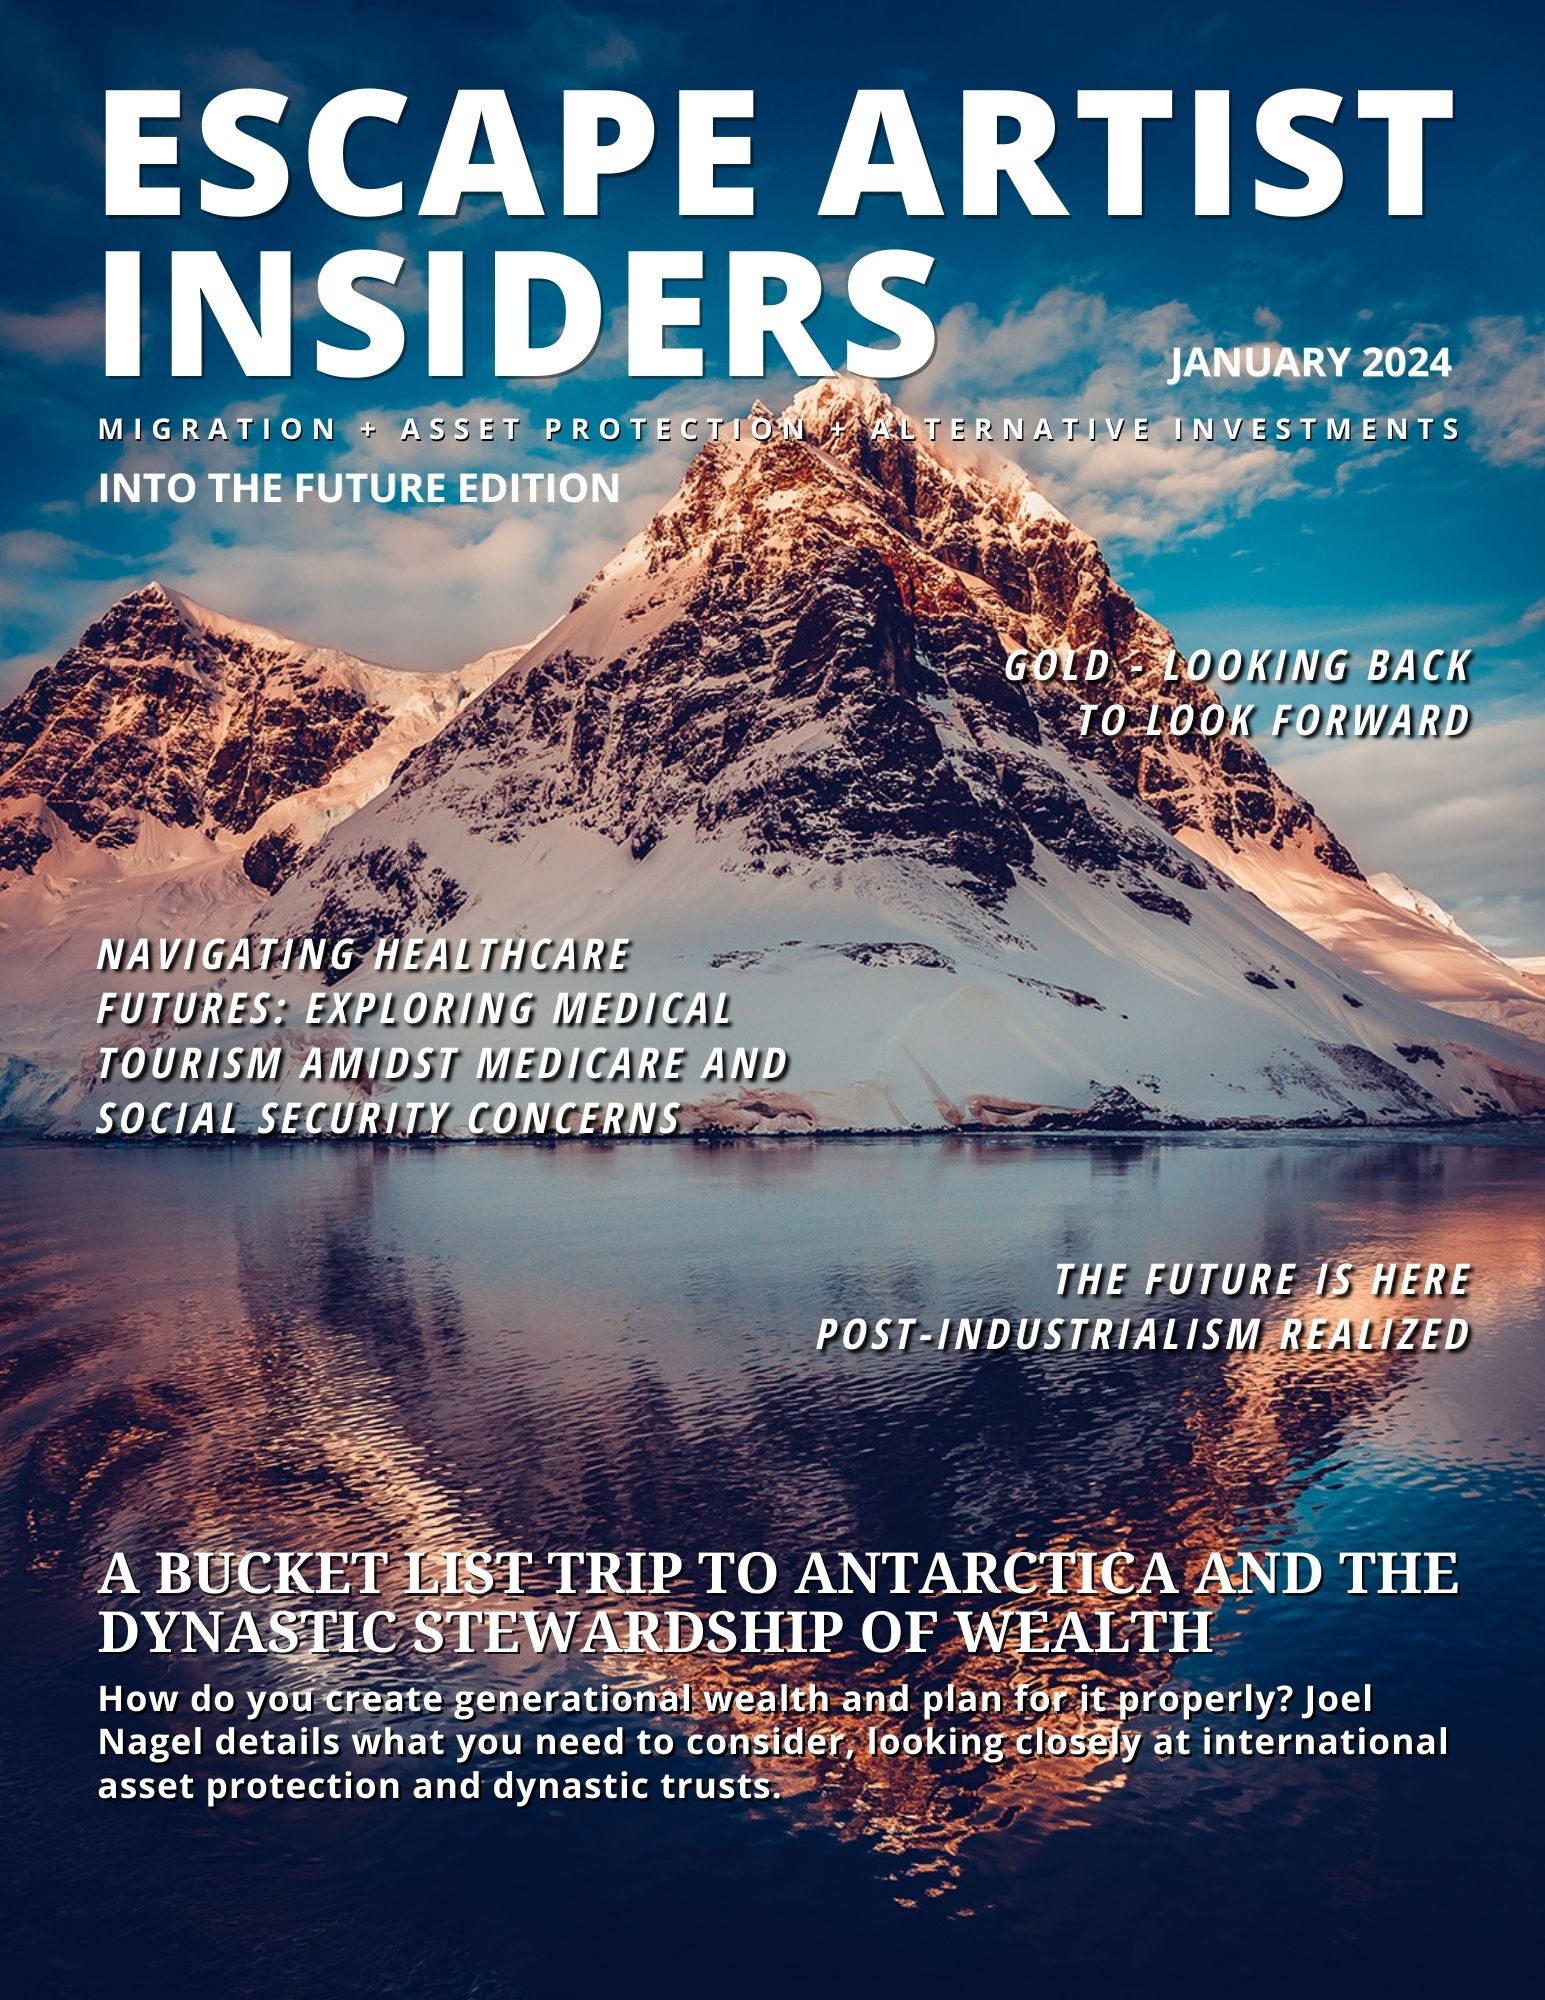 Escape Artist Insiders Magazine: Inside January 2024’s “Into the Future” Edition